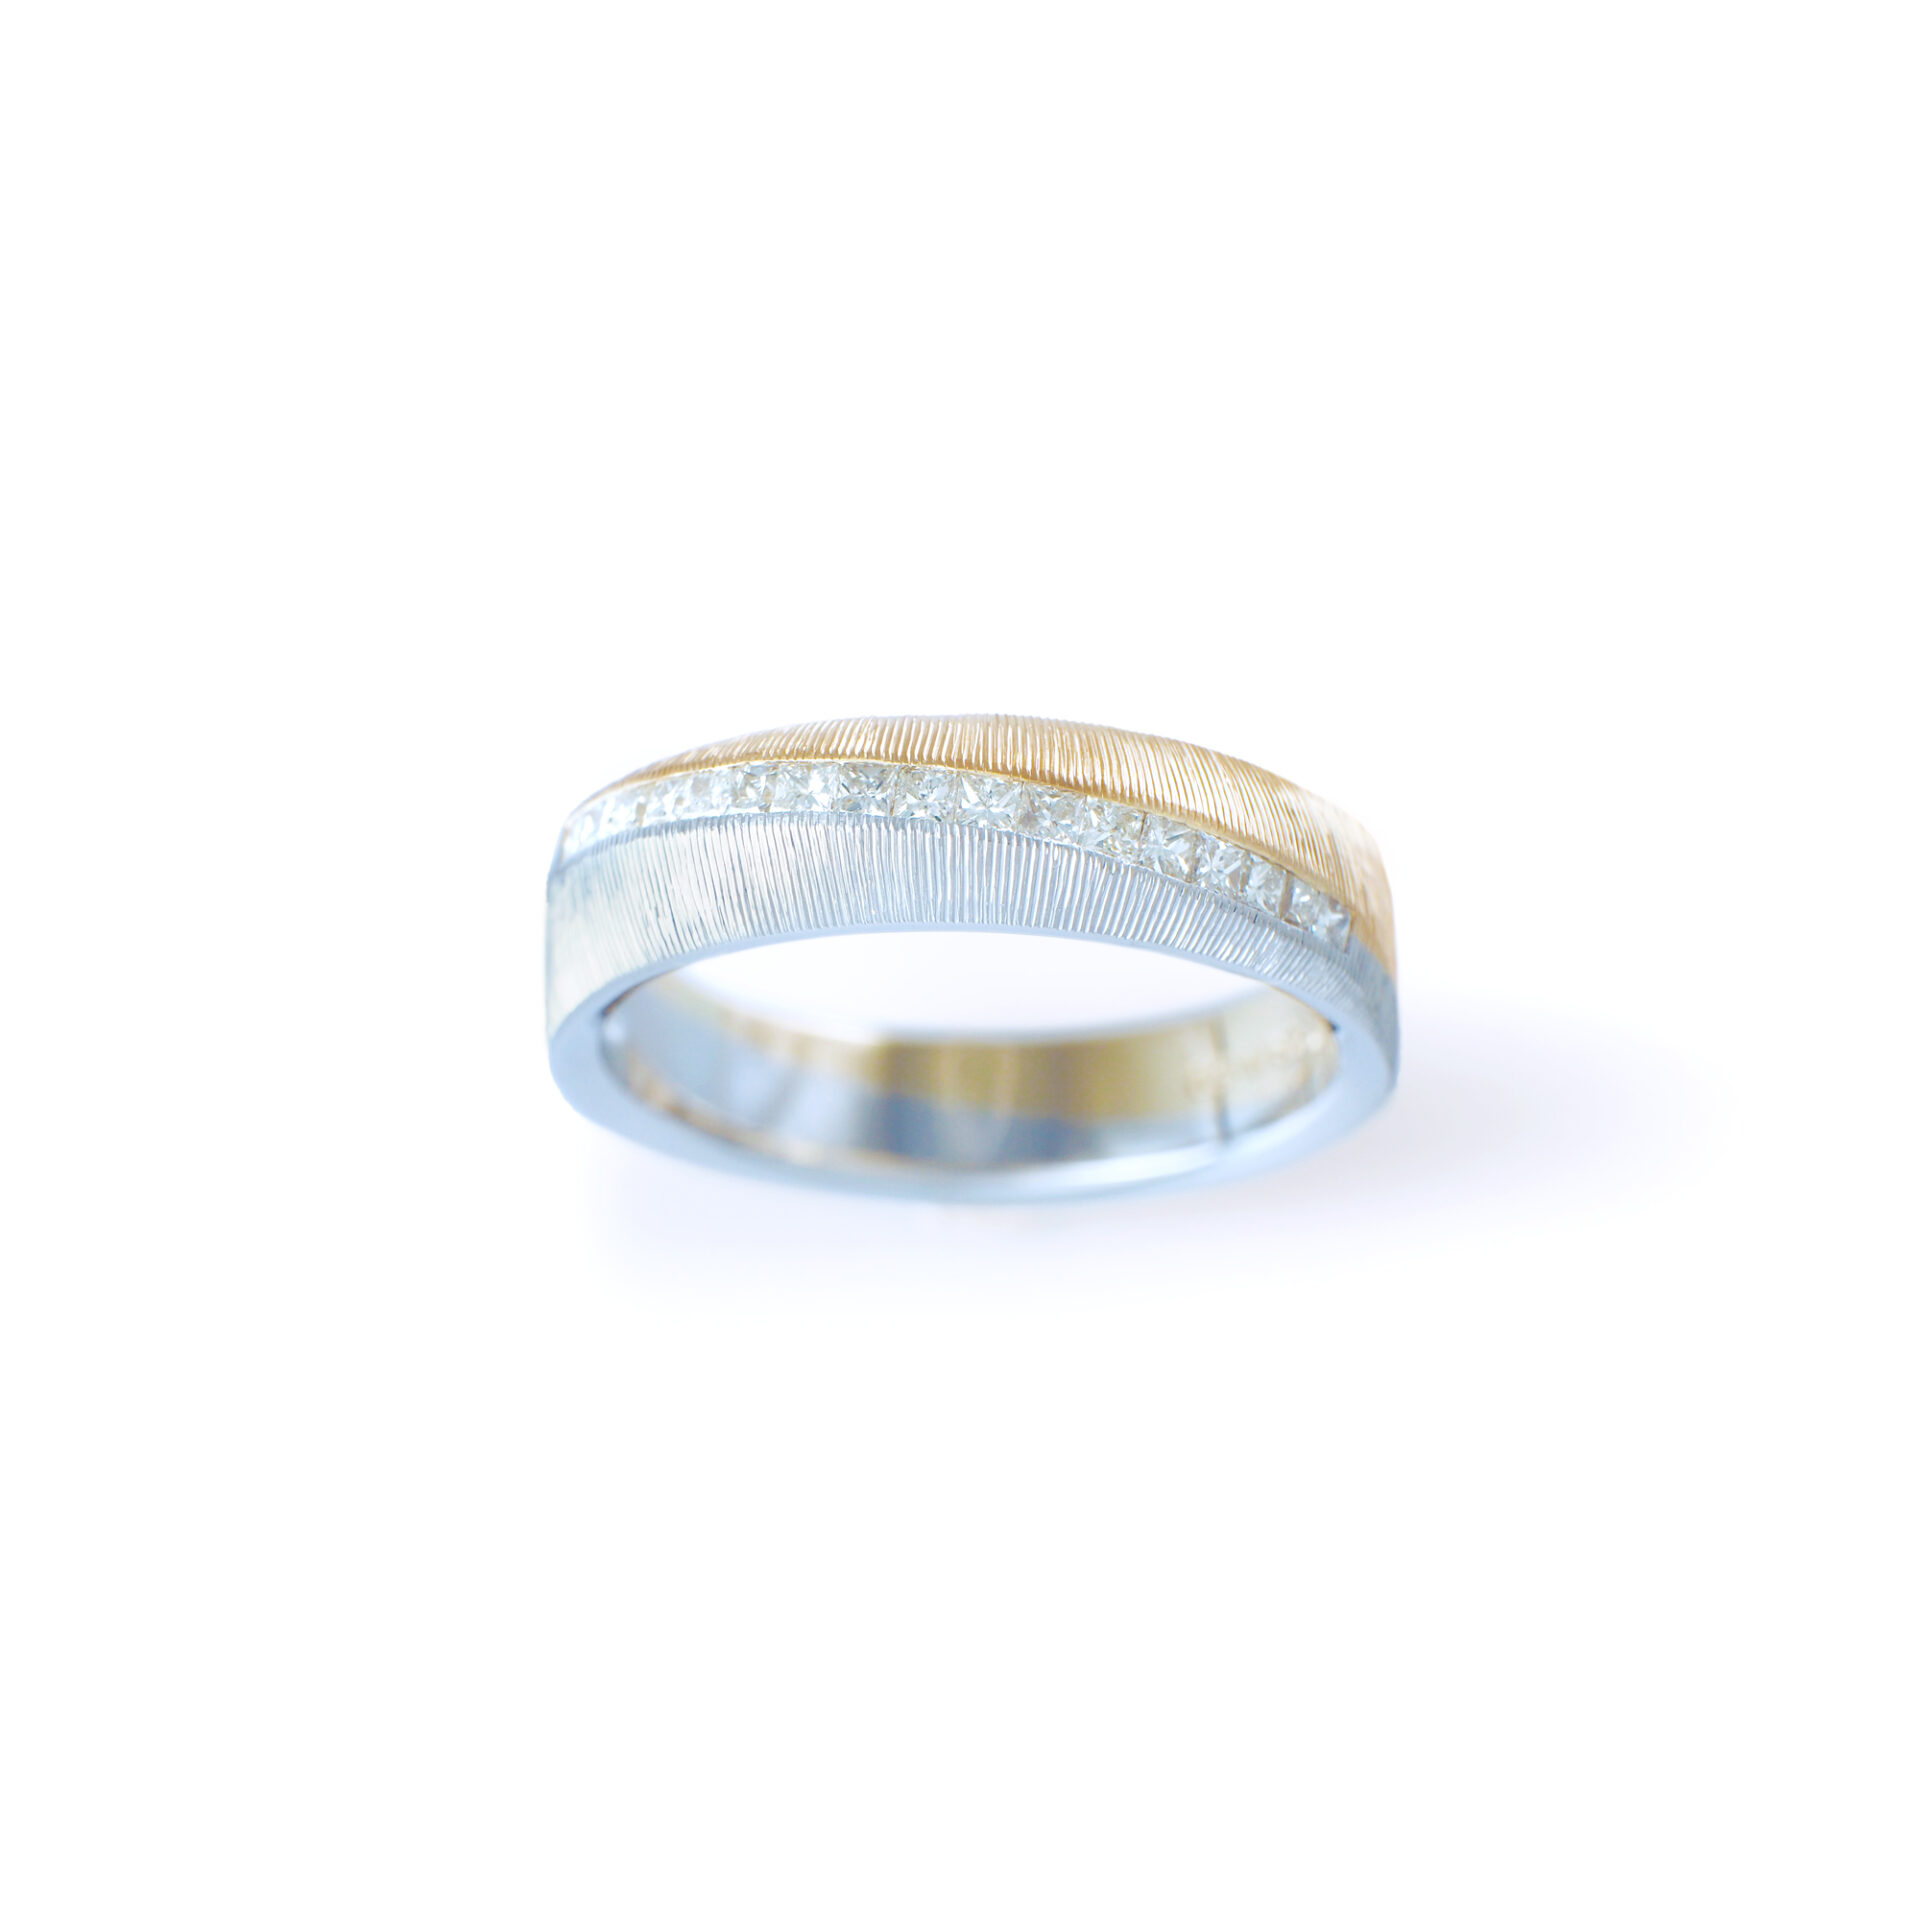 Pt950 K18 Diamonds ring jewelry customorder remake bespork jewellery SHINKO STUDIO japan jewelry